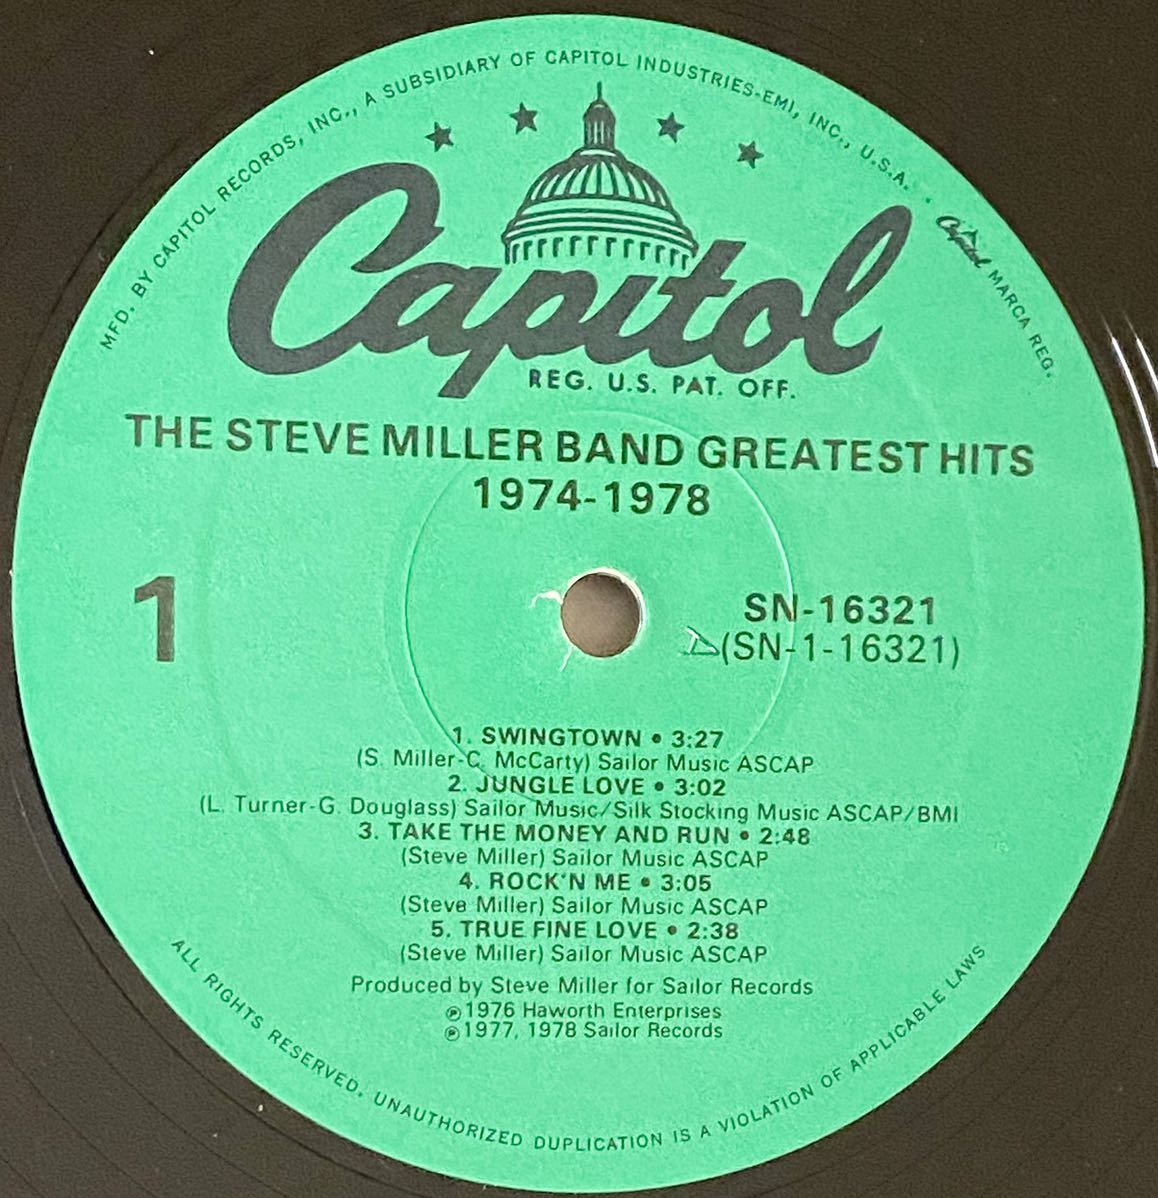 Steve Miller Band Greatest Hits 1974-78 レコード LP 1984年 US盤 Reissue Capitol Records SN 16321_画像4